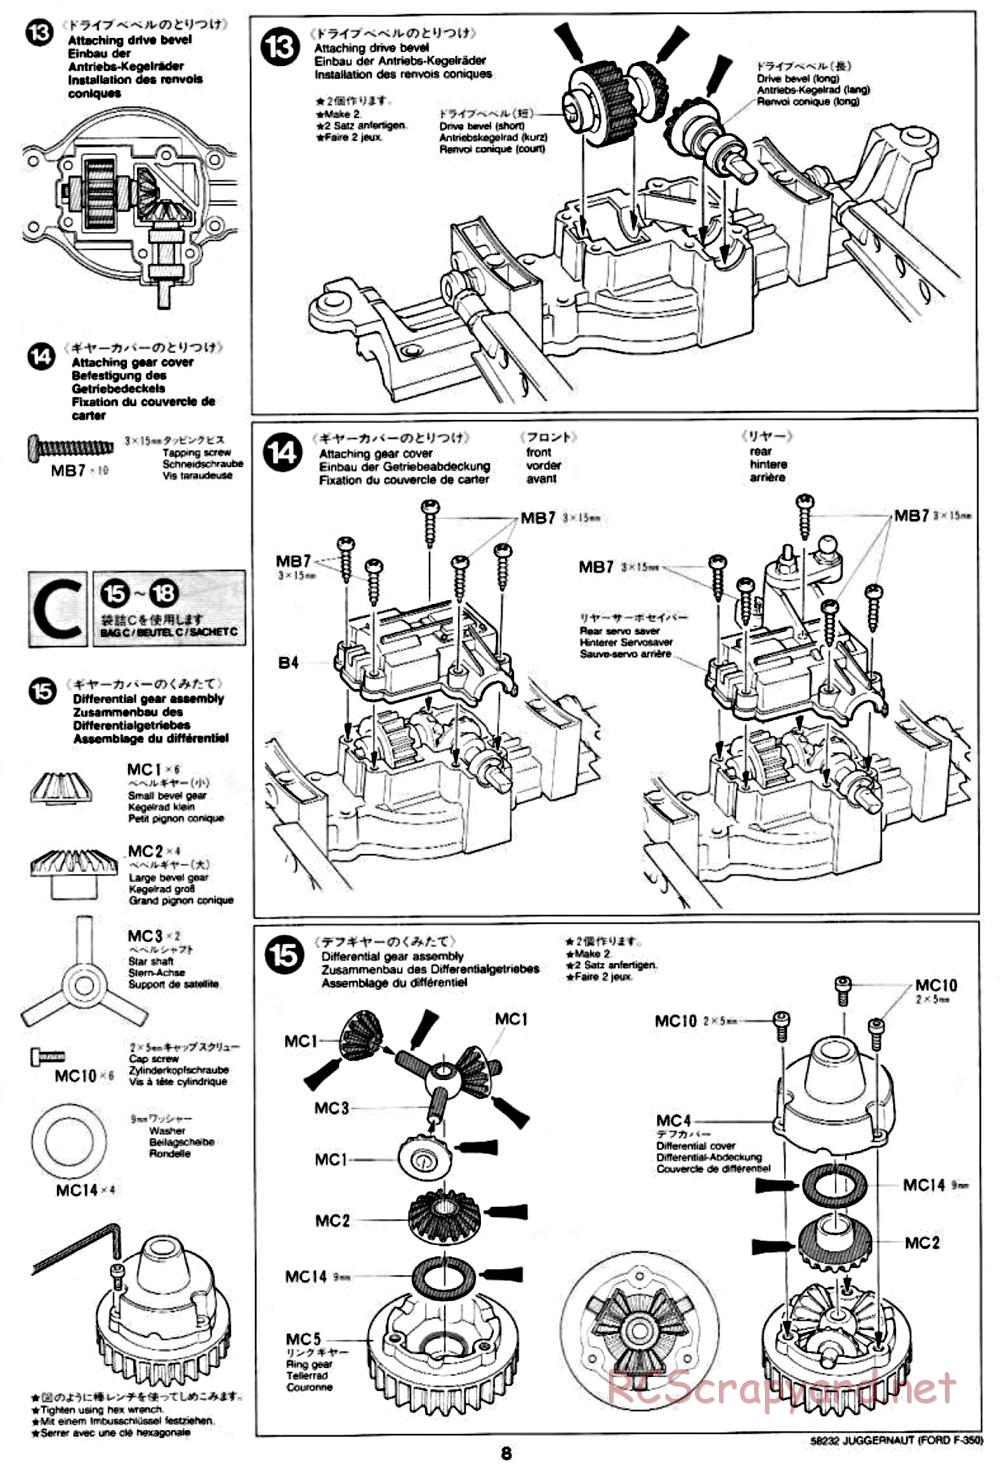 Tamiya - Juggernaut Chassis - Manual - Page 8